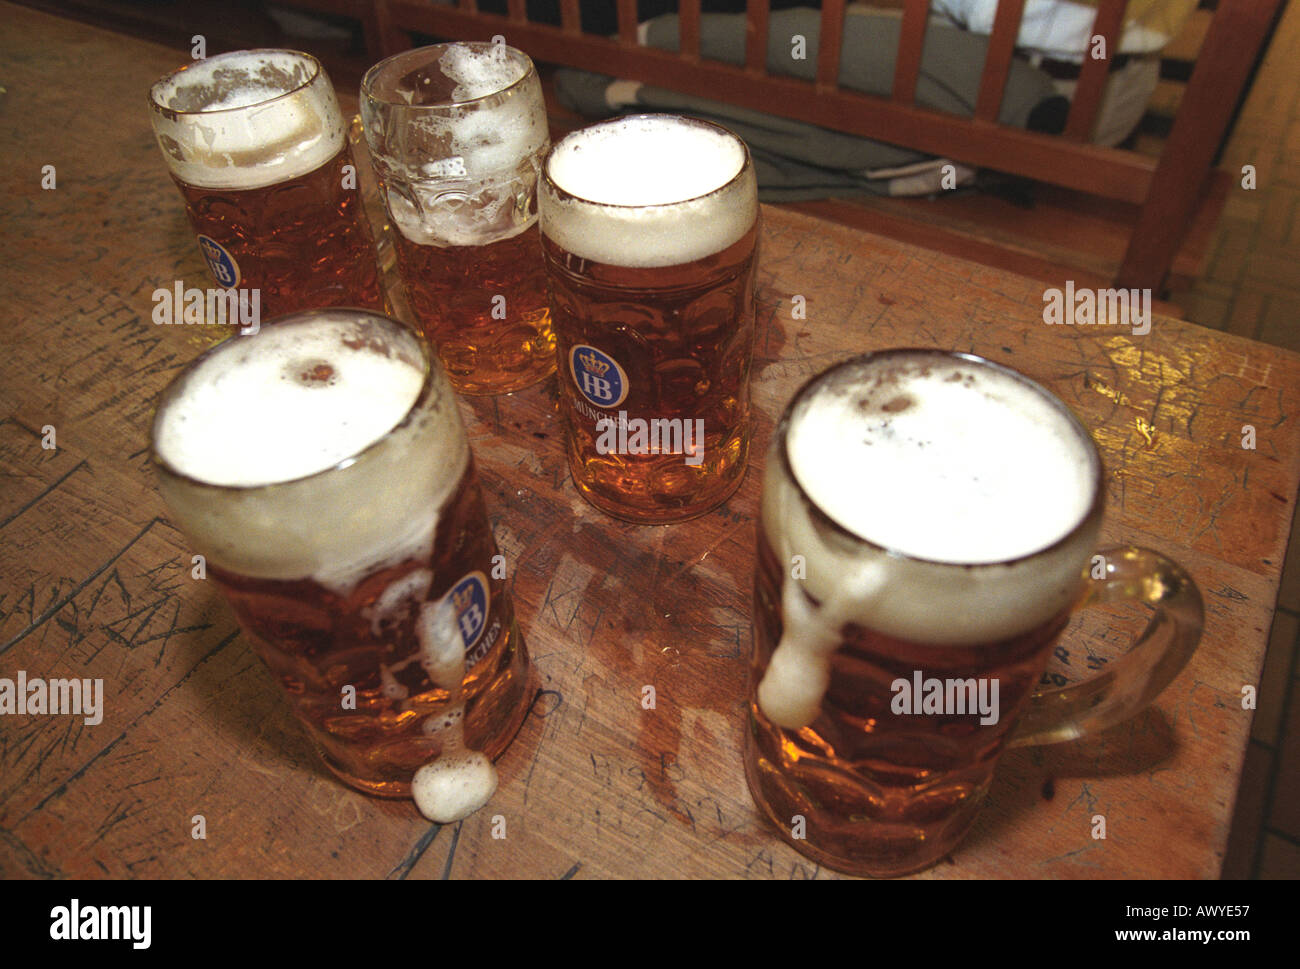 https://c8.alamy.com/comp/AWYE57/full-glasses-of-beer-at-munich-beer-festival-germany-AWYE57.jpg